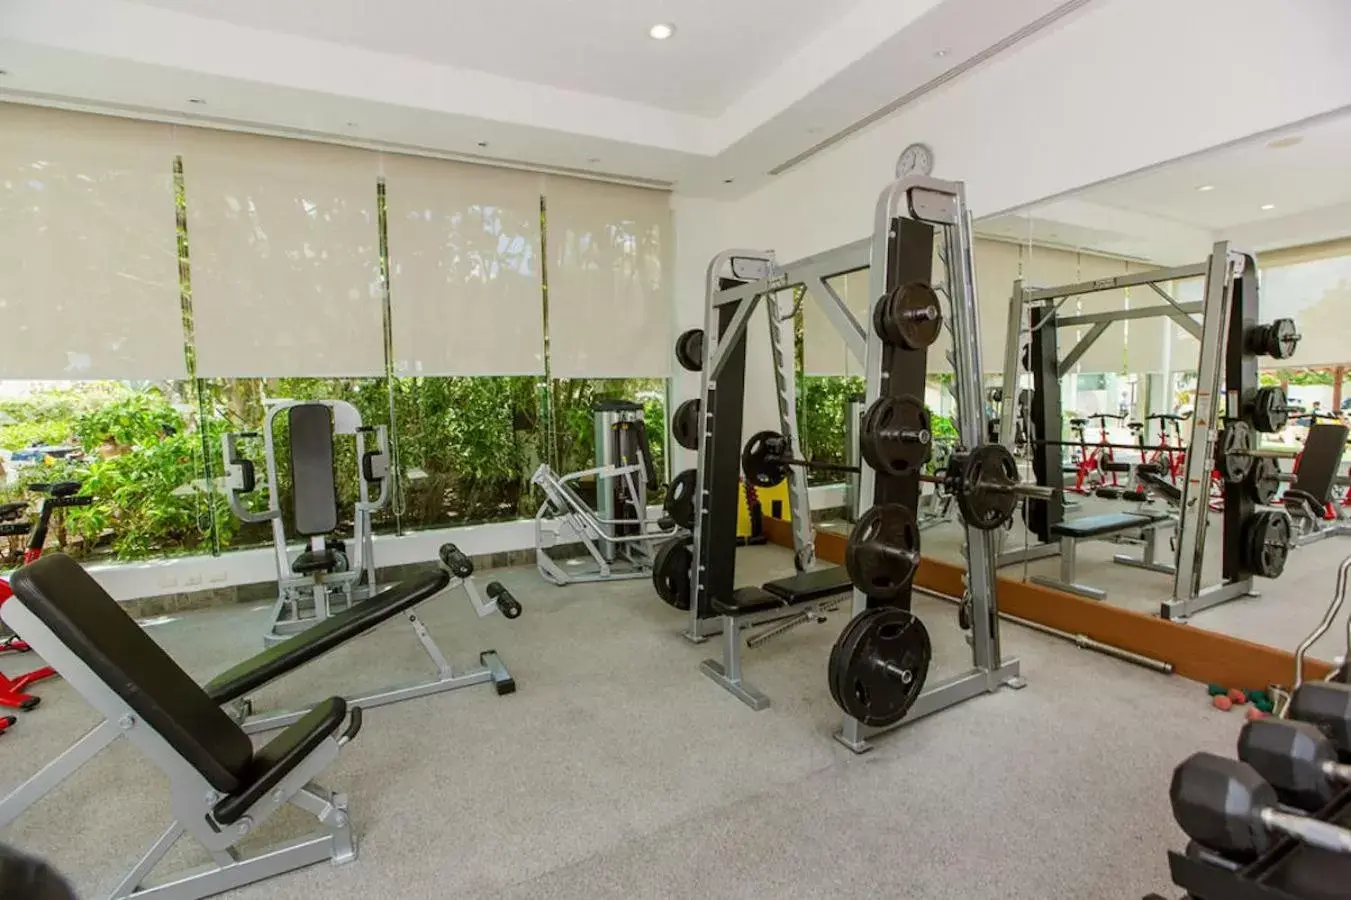 Fitness centre/facilities, Fitness Center/Facilities in Condos inside an Ocean Front Hotel Resort